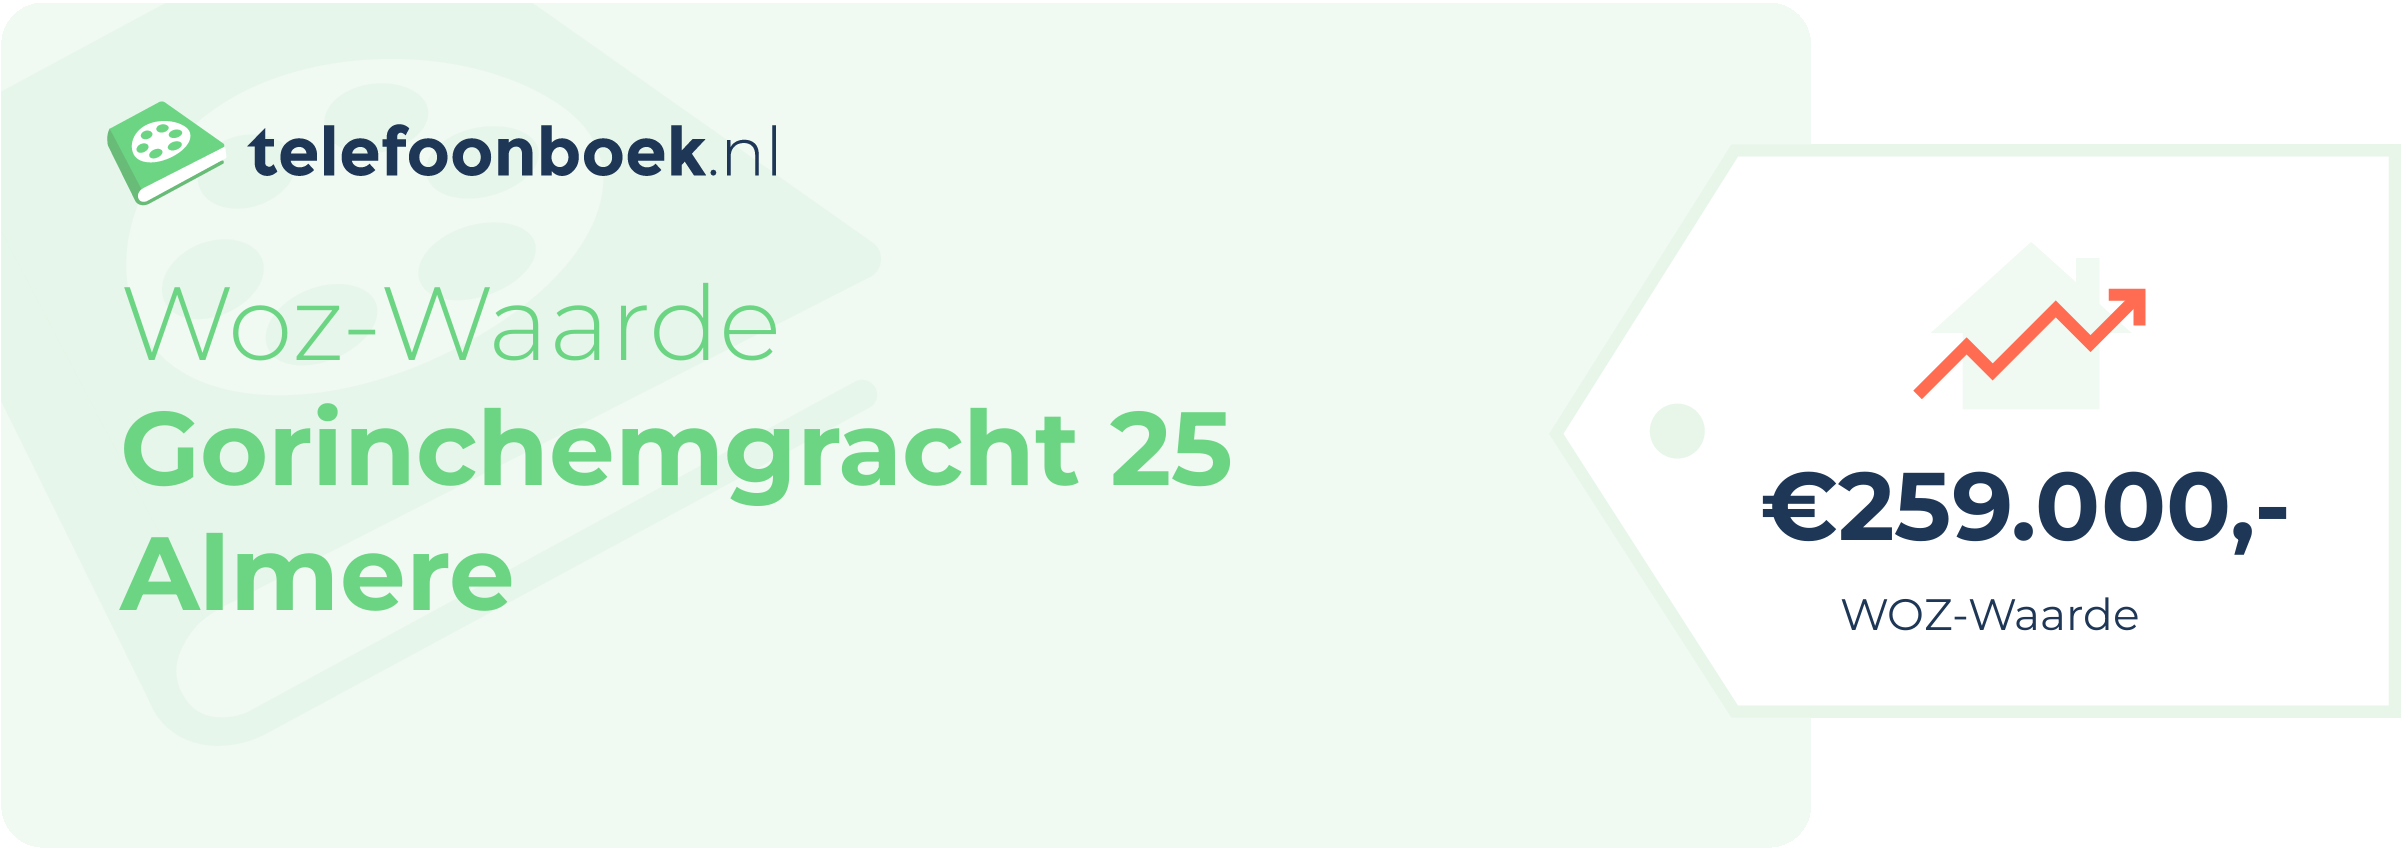 WOZ-waarde Gorinchemgracht 25 Almere